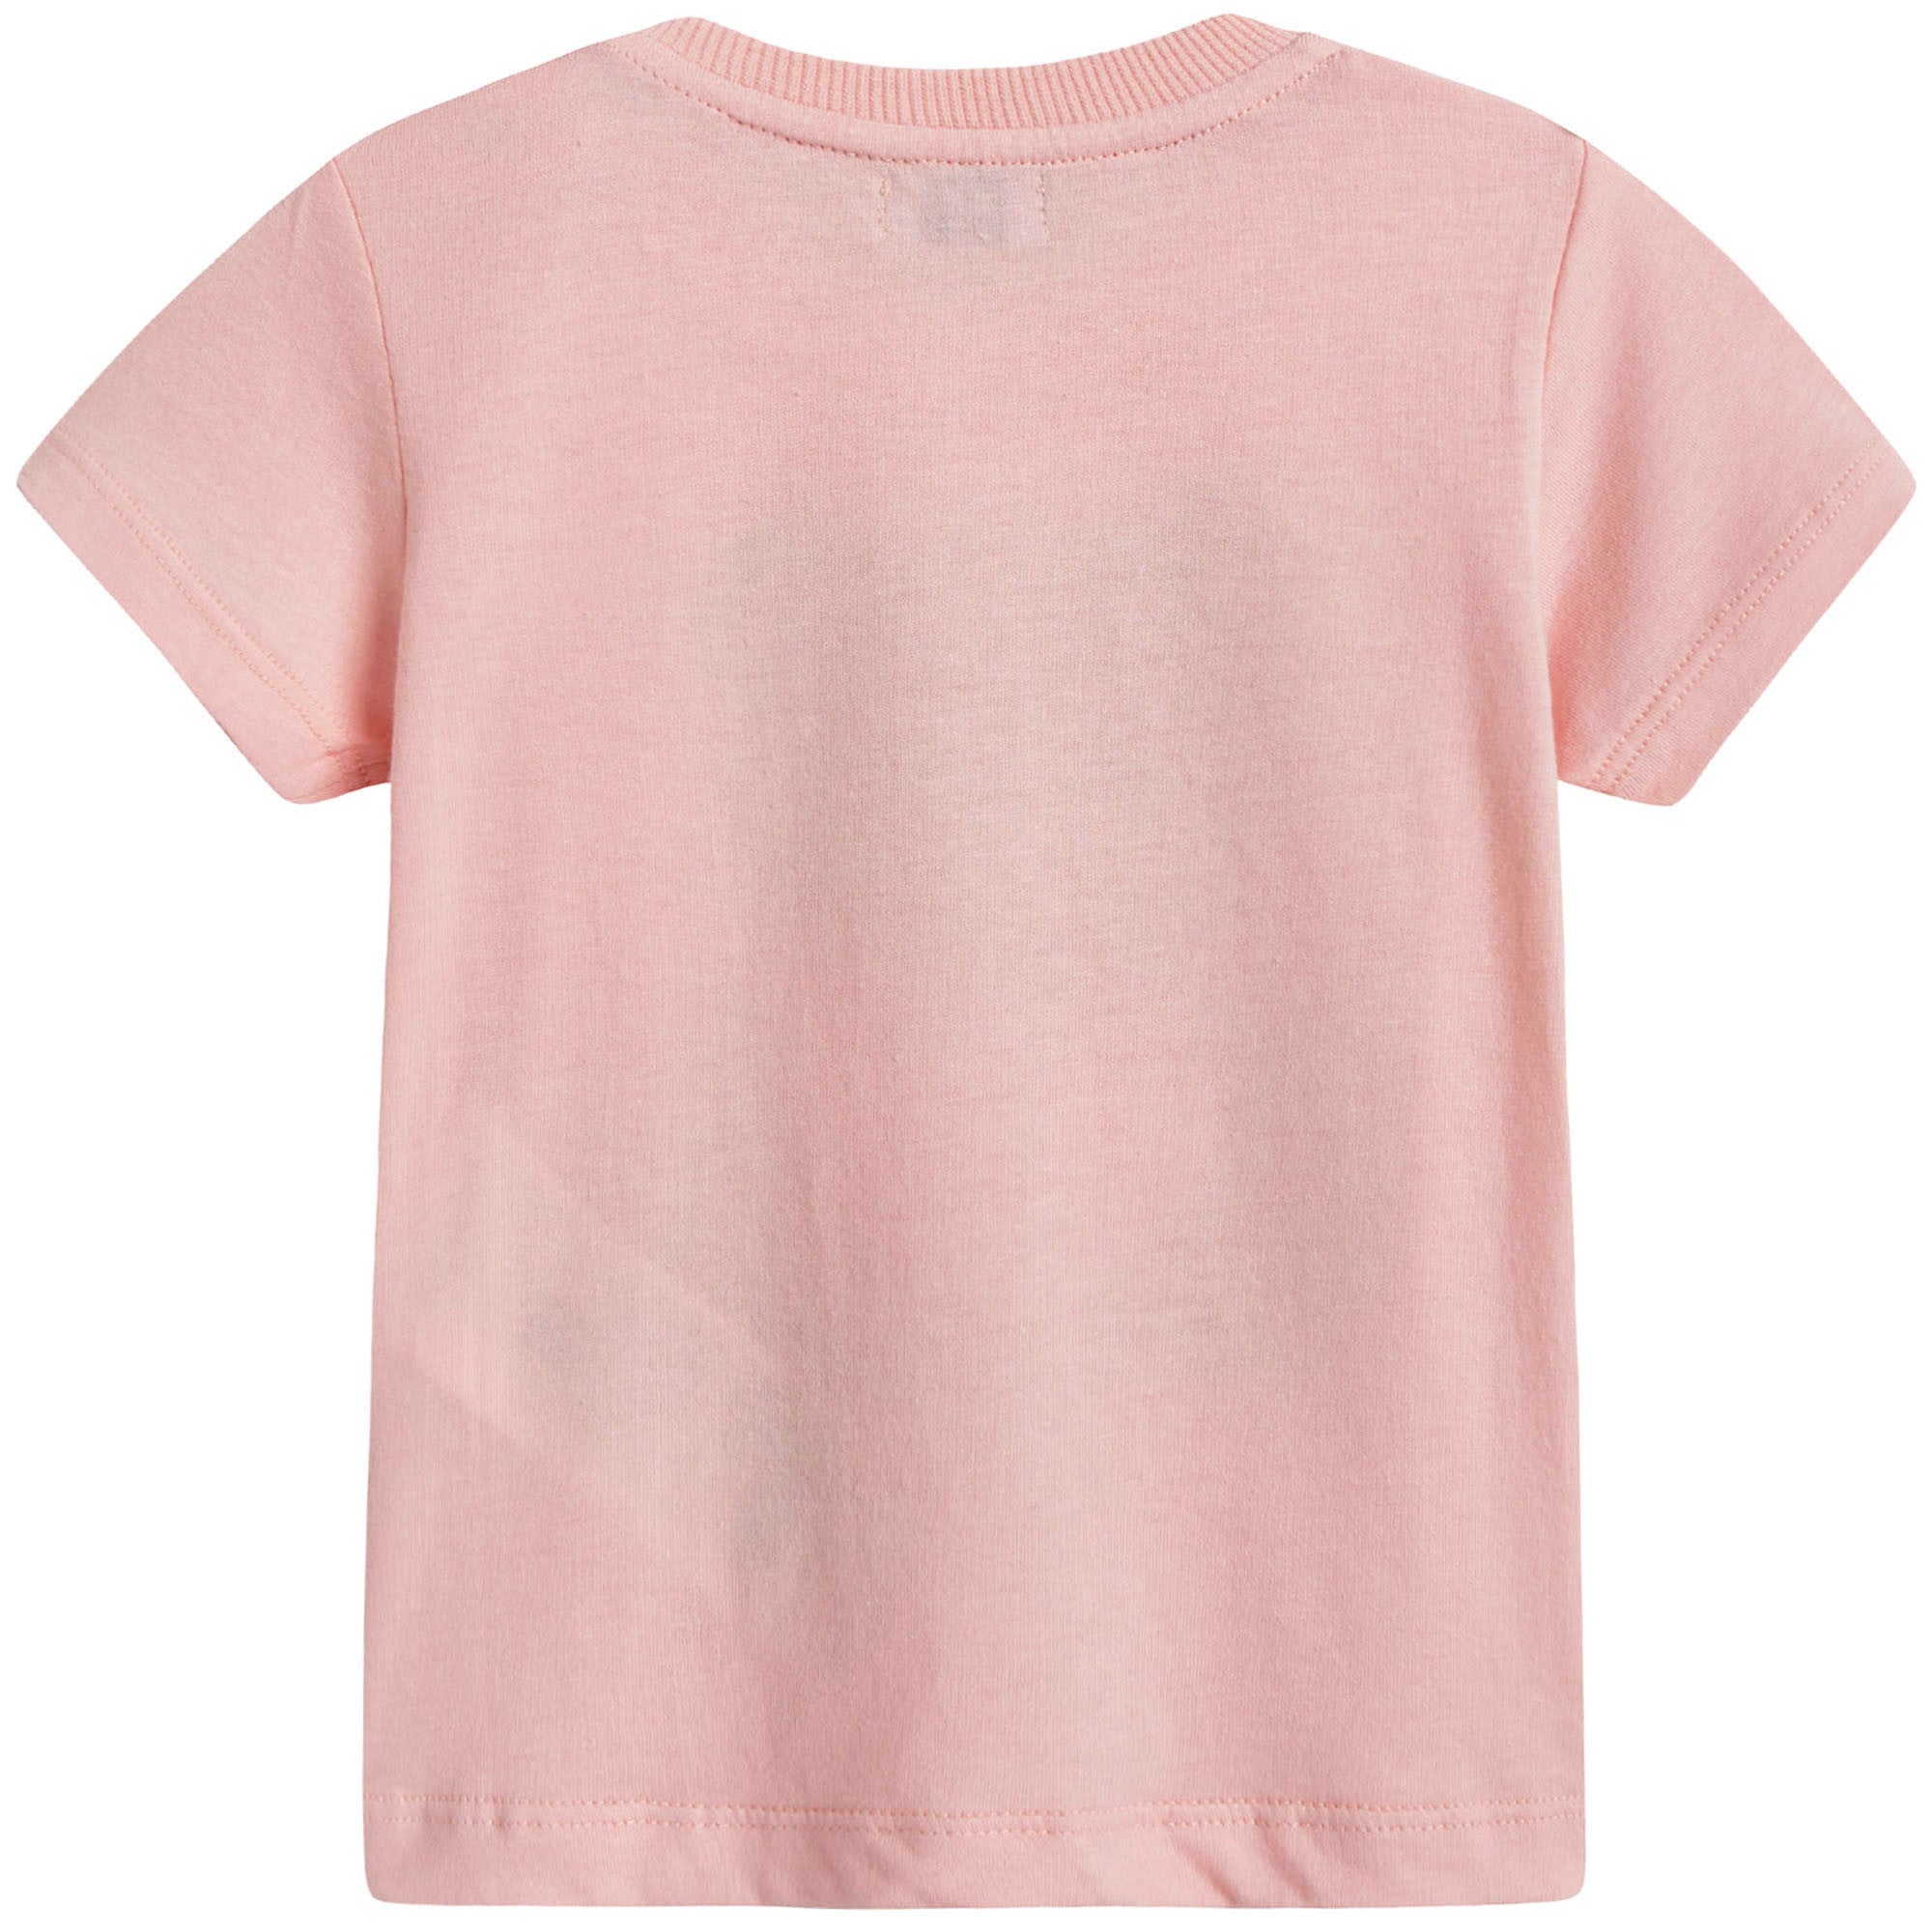 Baby Pink Cotton T-shirt